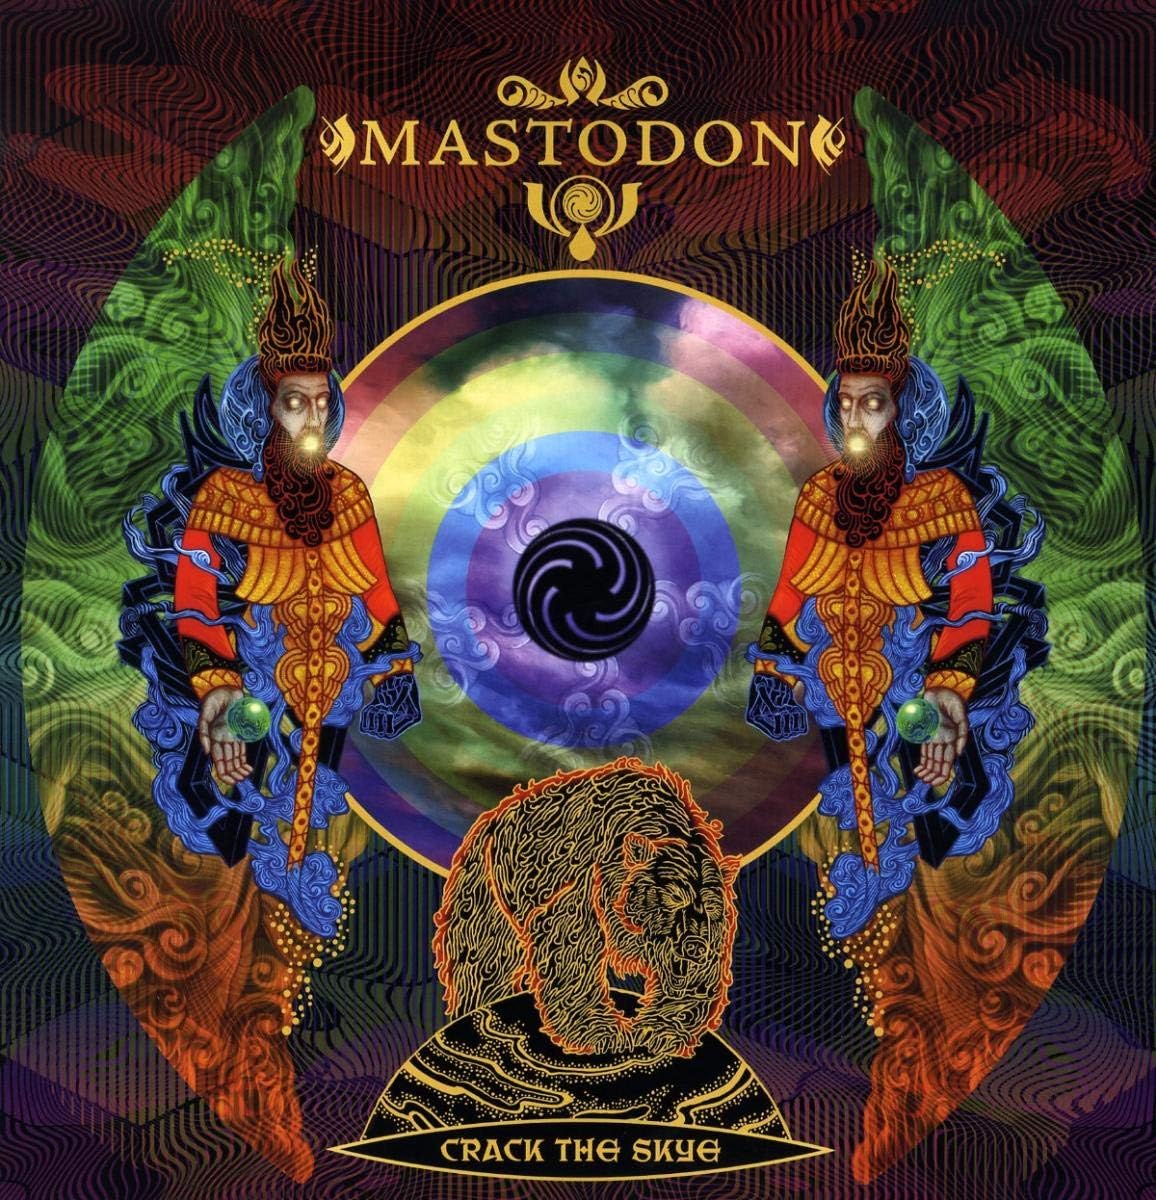 Mastodon "Crack The Skye" Vinyl